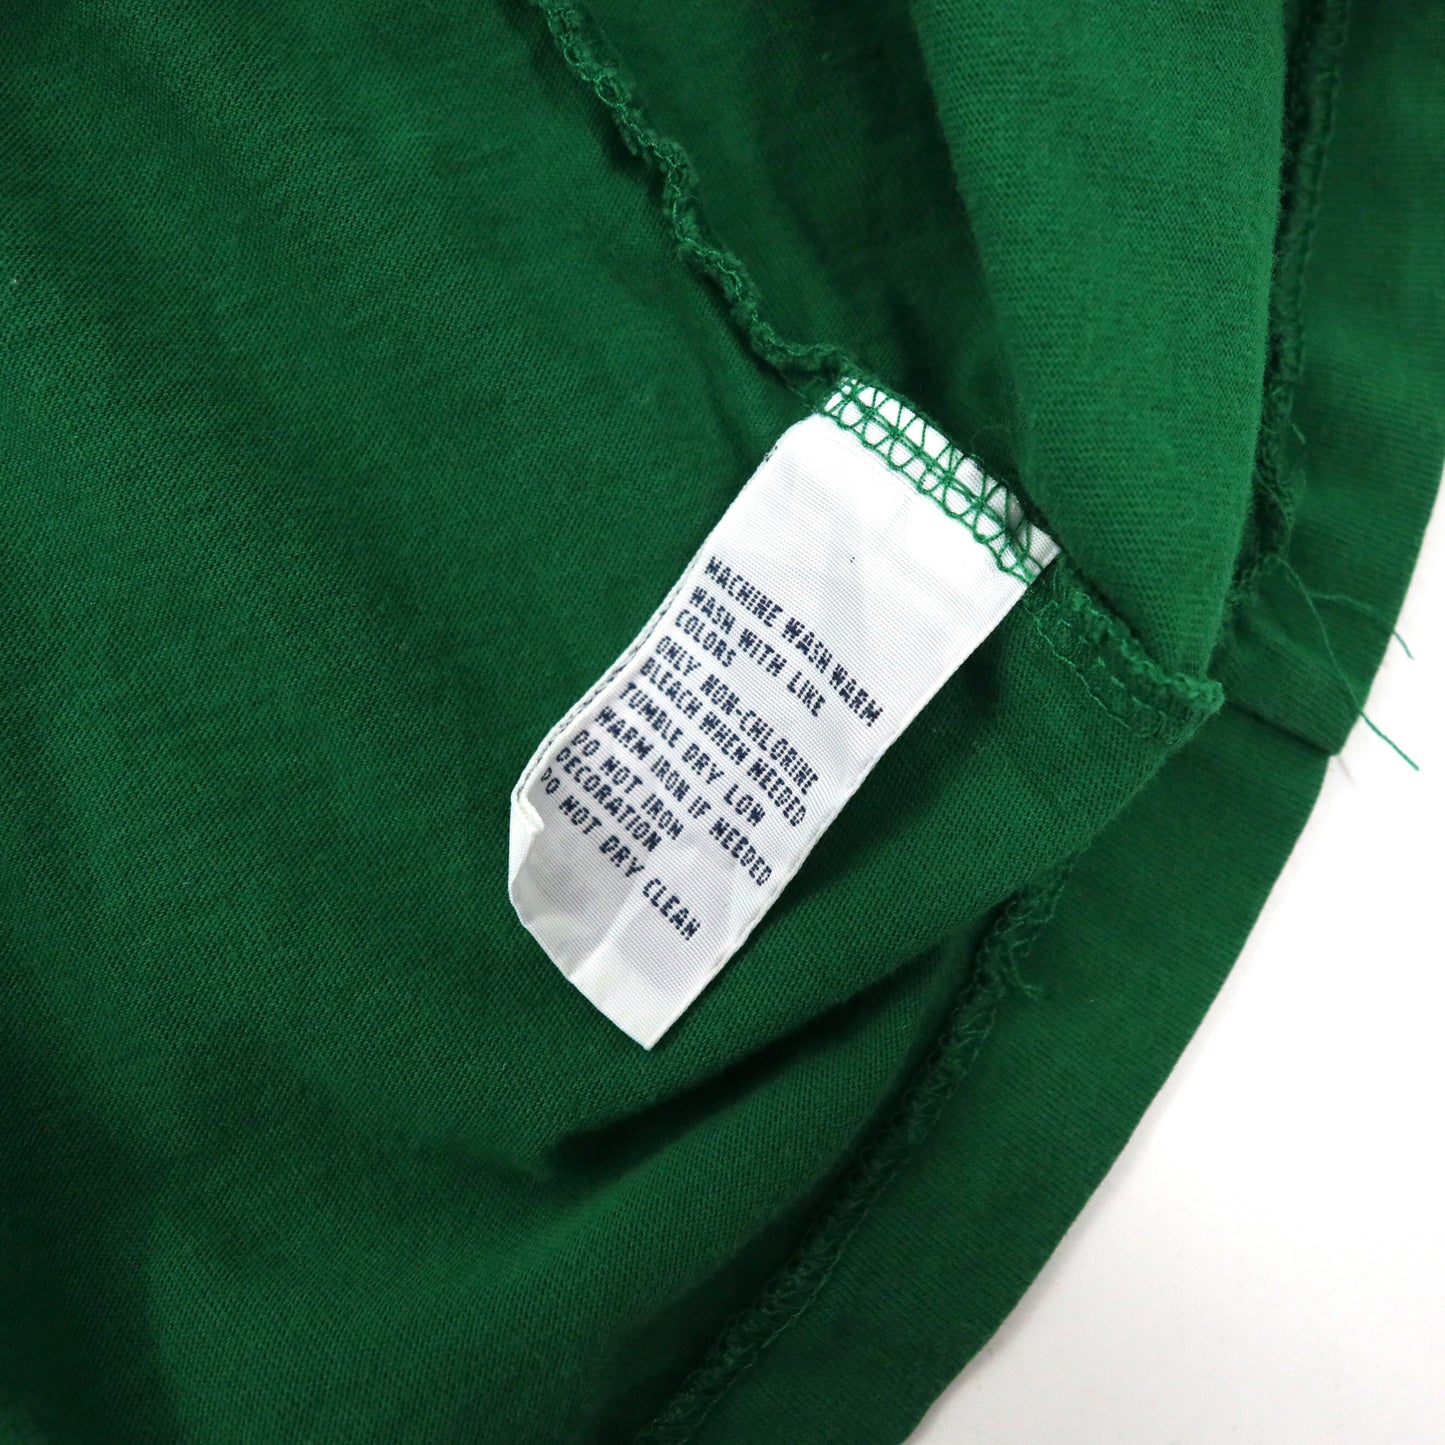 POLO RALPH LAUREN ビッグサイズ ポケットTシャツ 2XL グリーン コットン スモールポニー刺繍